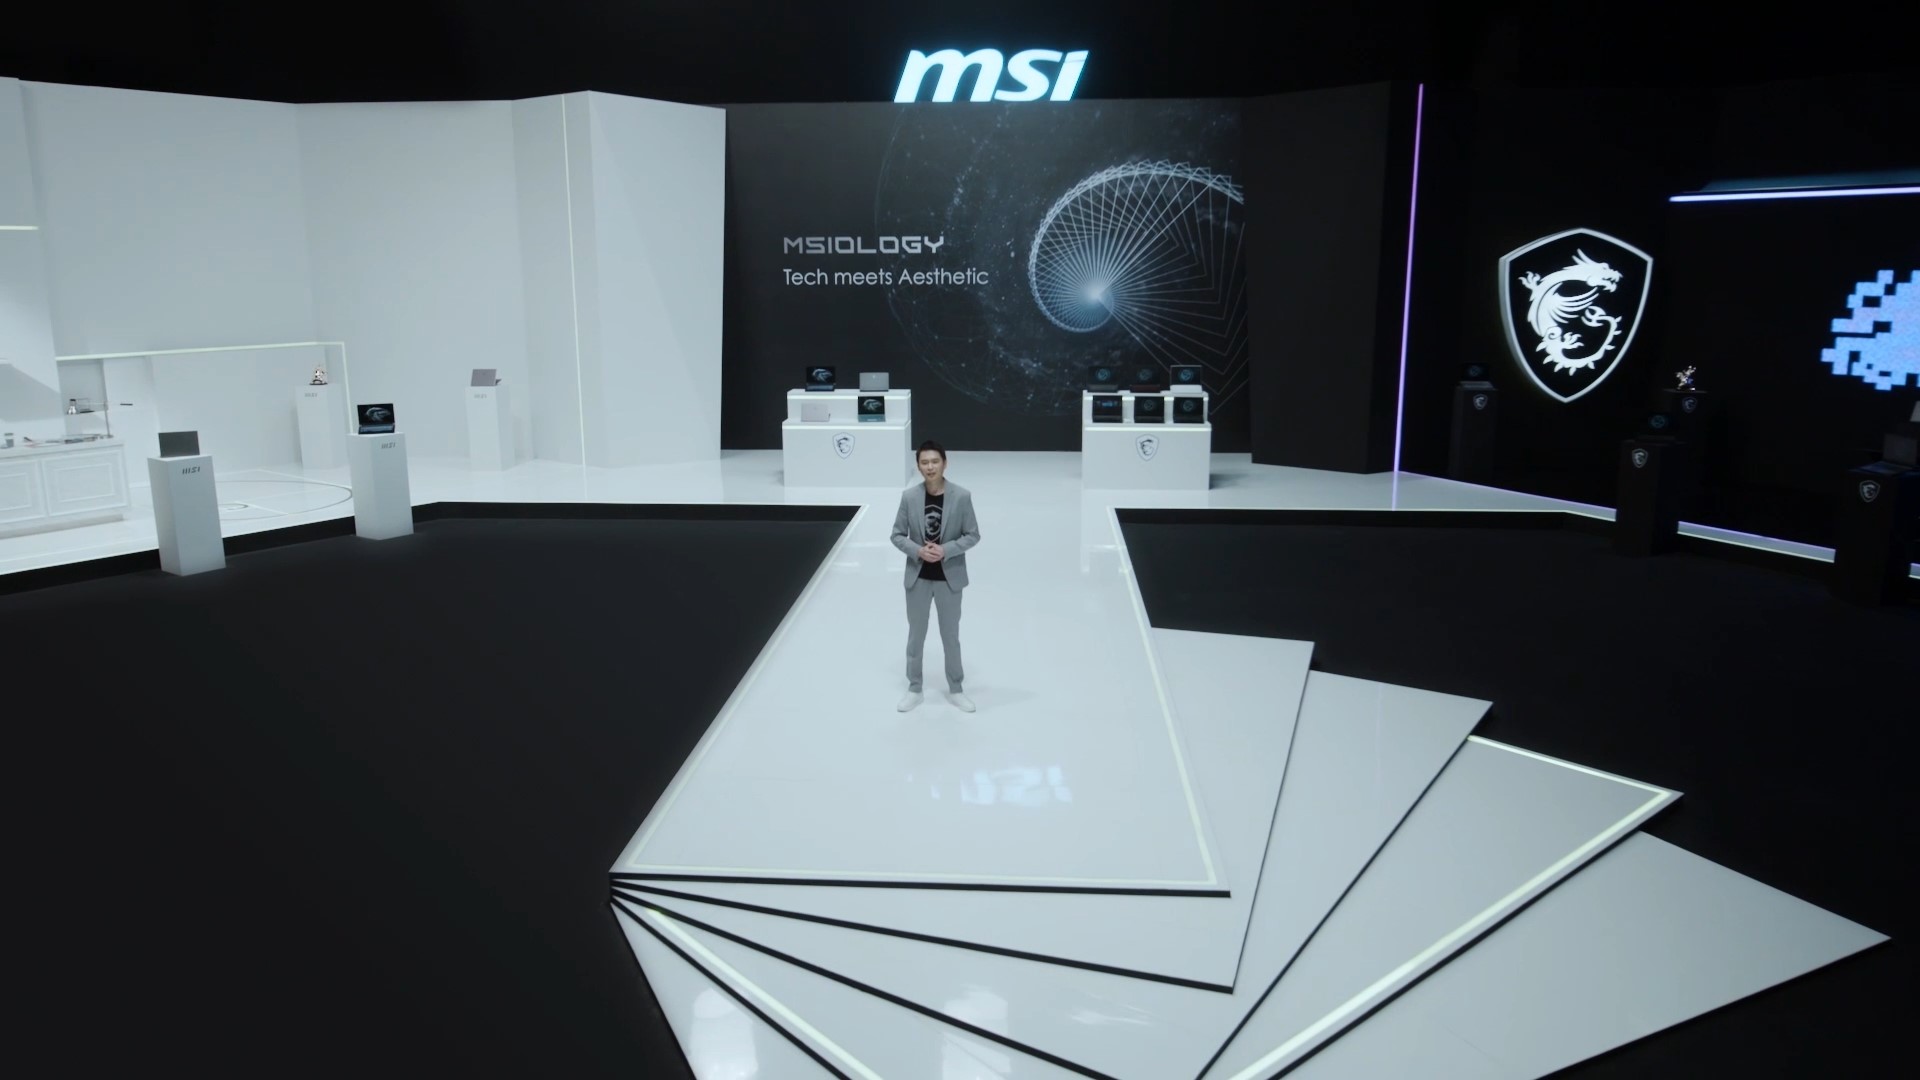 msi msiology tech meets aesthetc virtual event ending ค้นหาคำตอบว่า ความสวยงามจะผสมผสานกับเทคโนโลยีได้อย่างไร? ในงานเปิดตัว MSI โน้ตบุ๊กที่ติดตั้งหน่วยประมวลผล 11th Gen Intel® H Series รุ่นใหม่ MSIology: Tech meets Aesthetic พร้อมเป็นเจ้าของก่อนใคร ในข้อเสนอ Pre Order สุดพิเศษ!